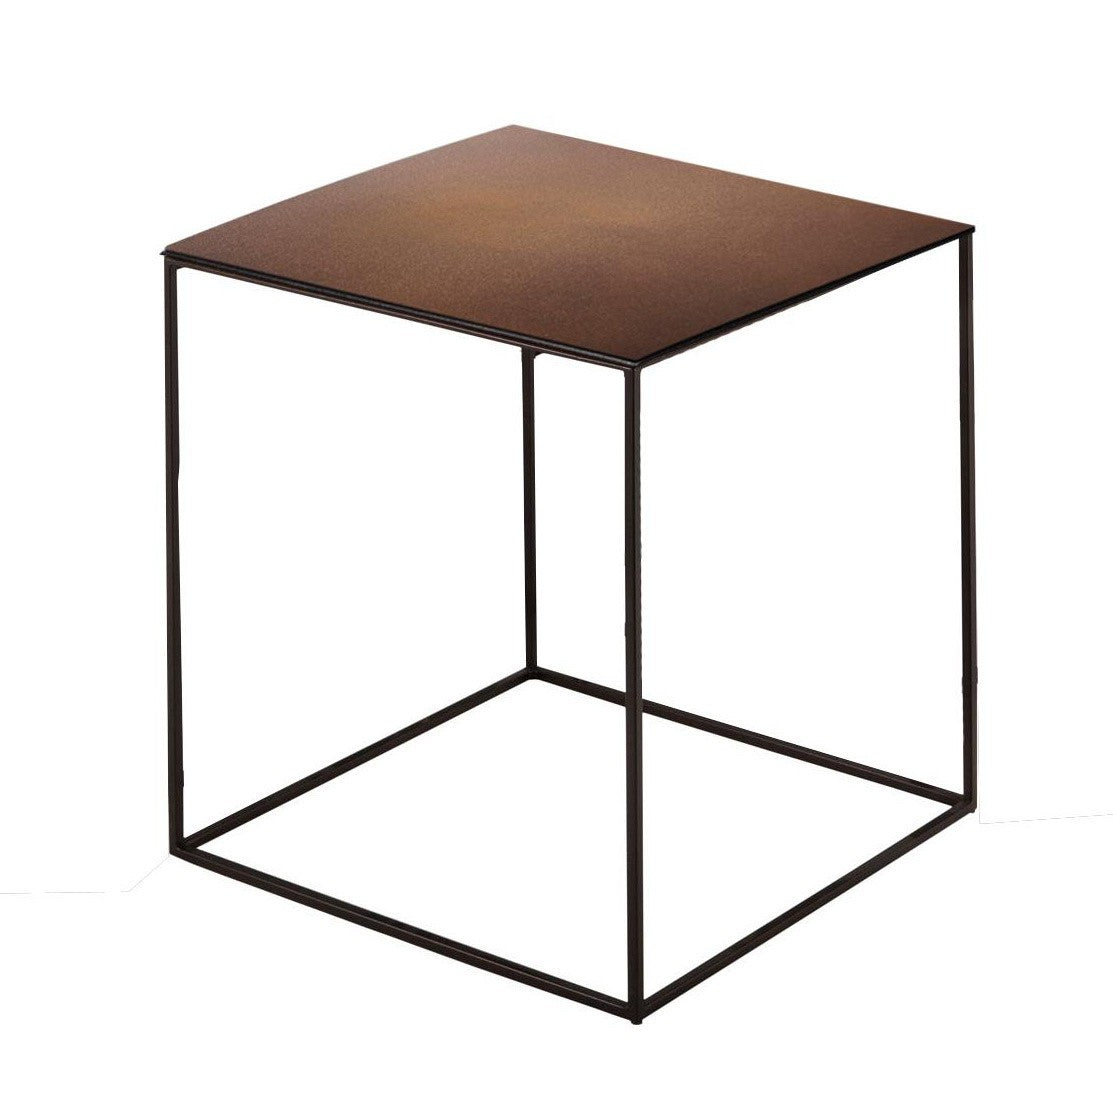 Slim Irony Table - The Design Part